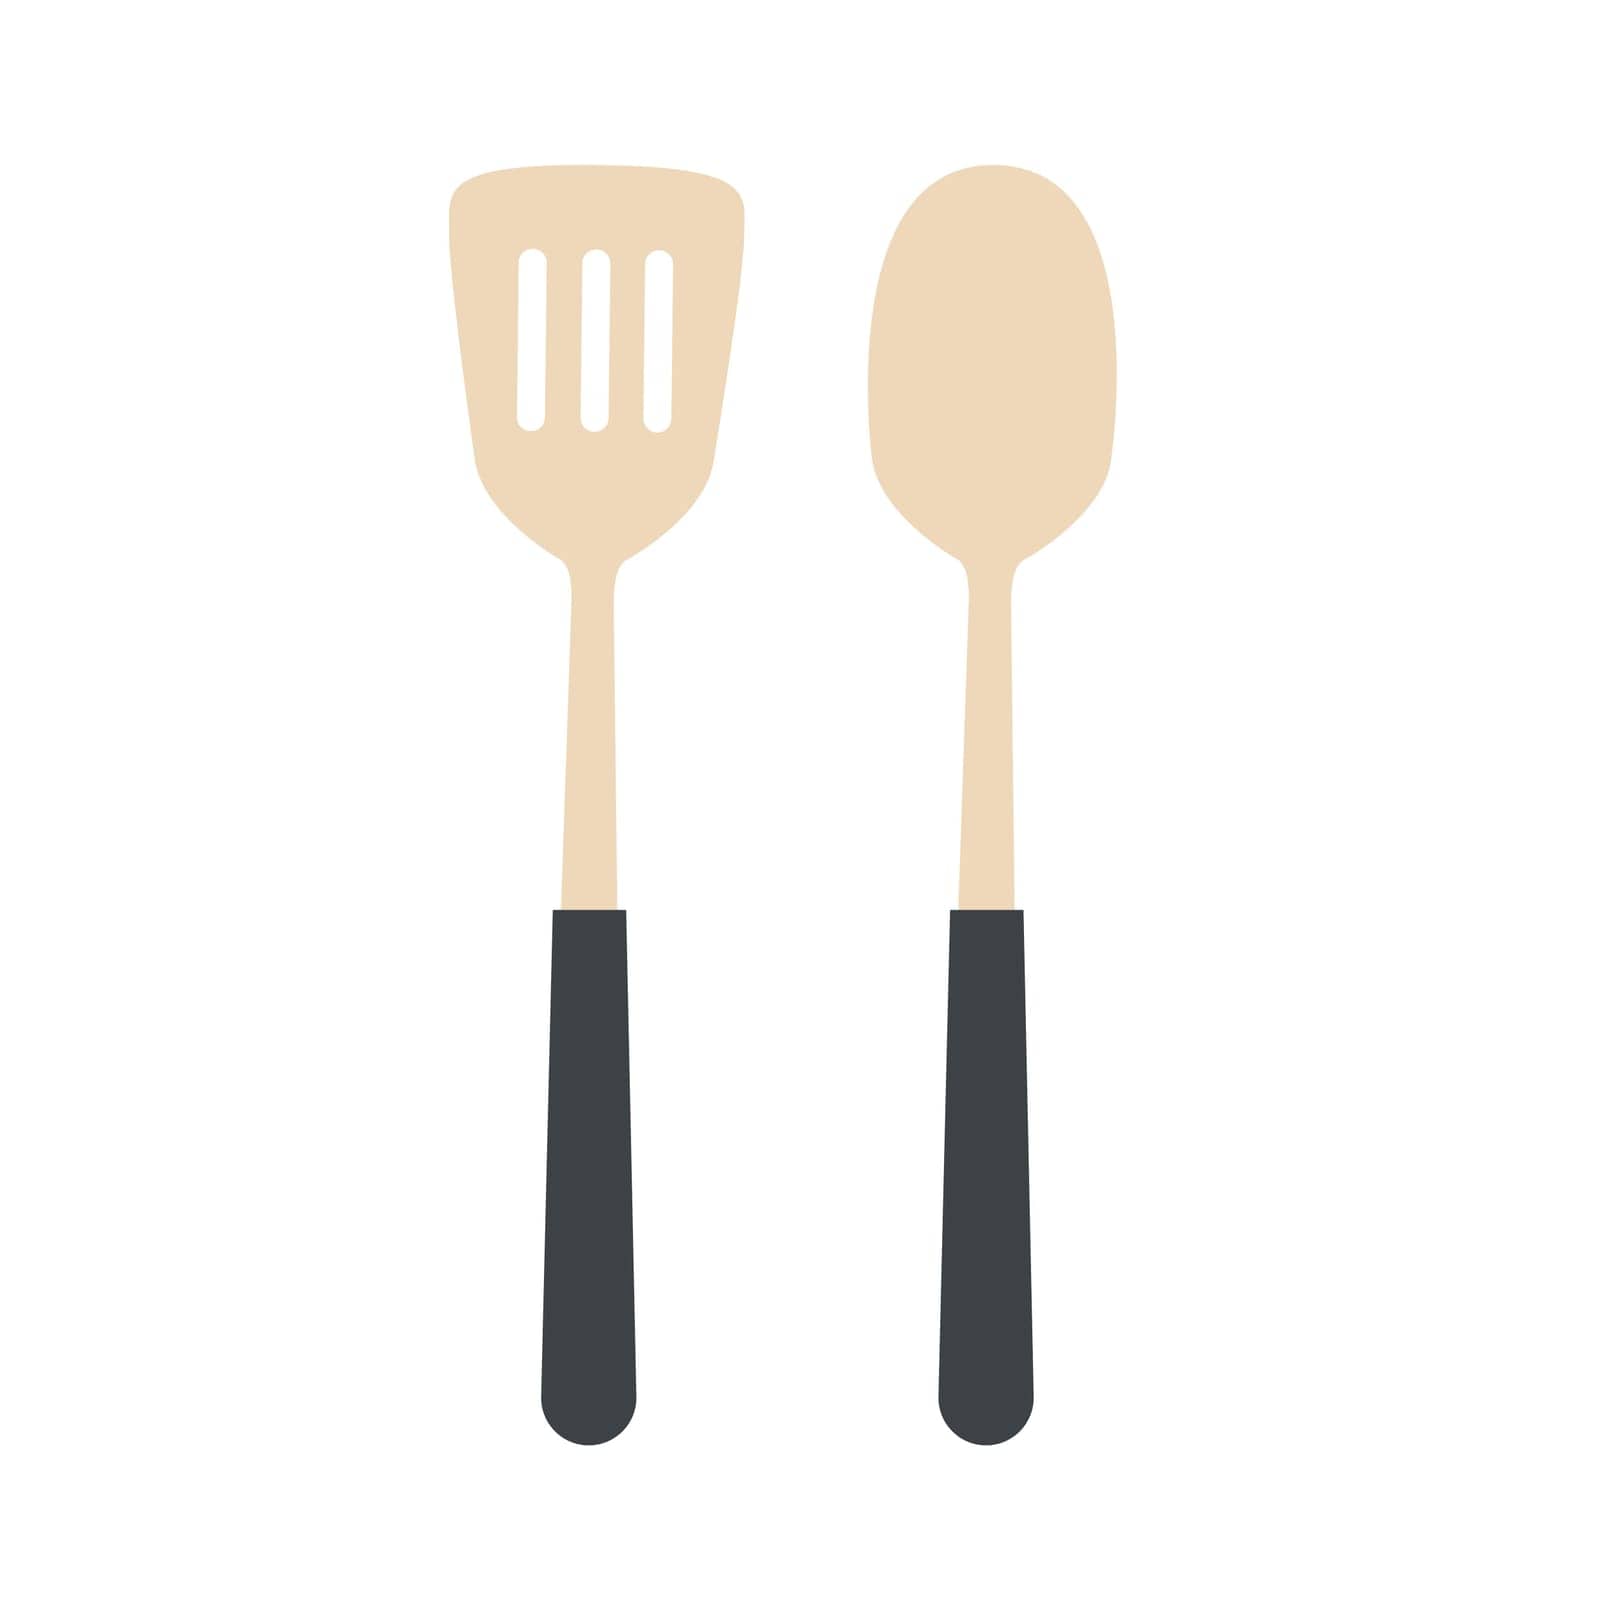 Kitchen food utensils. Food preparing tools, cooking instruments vector illustration